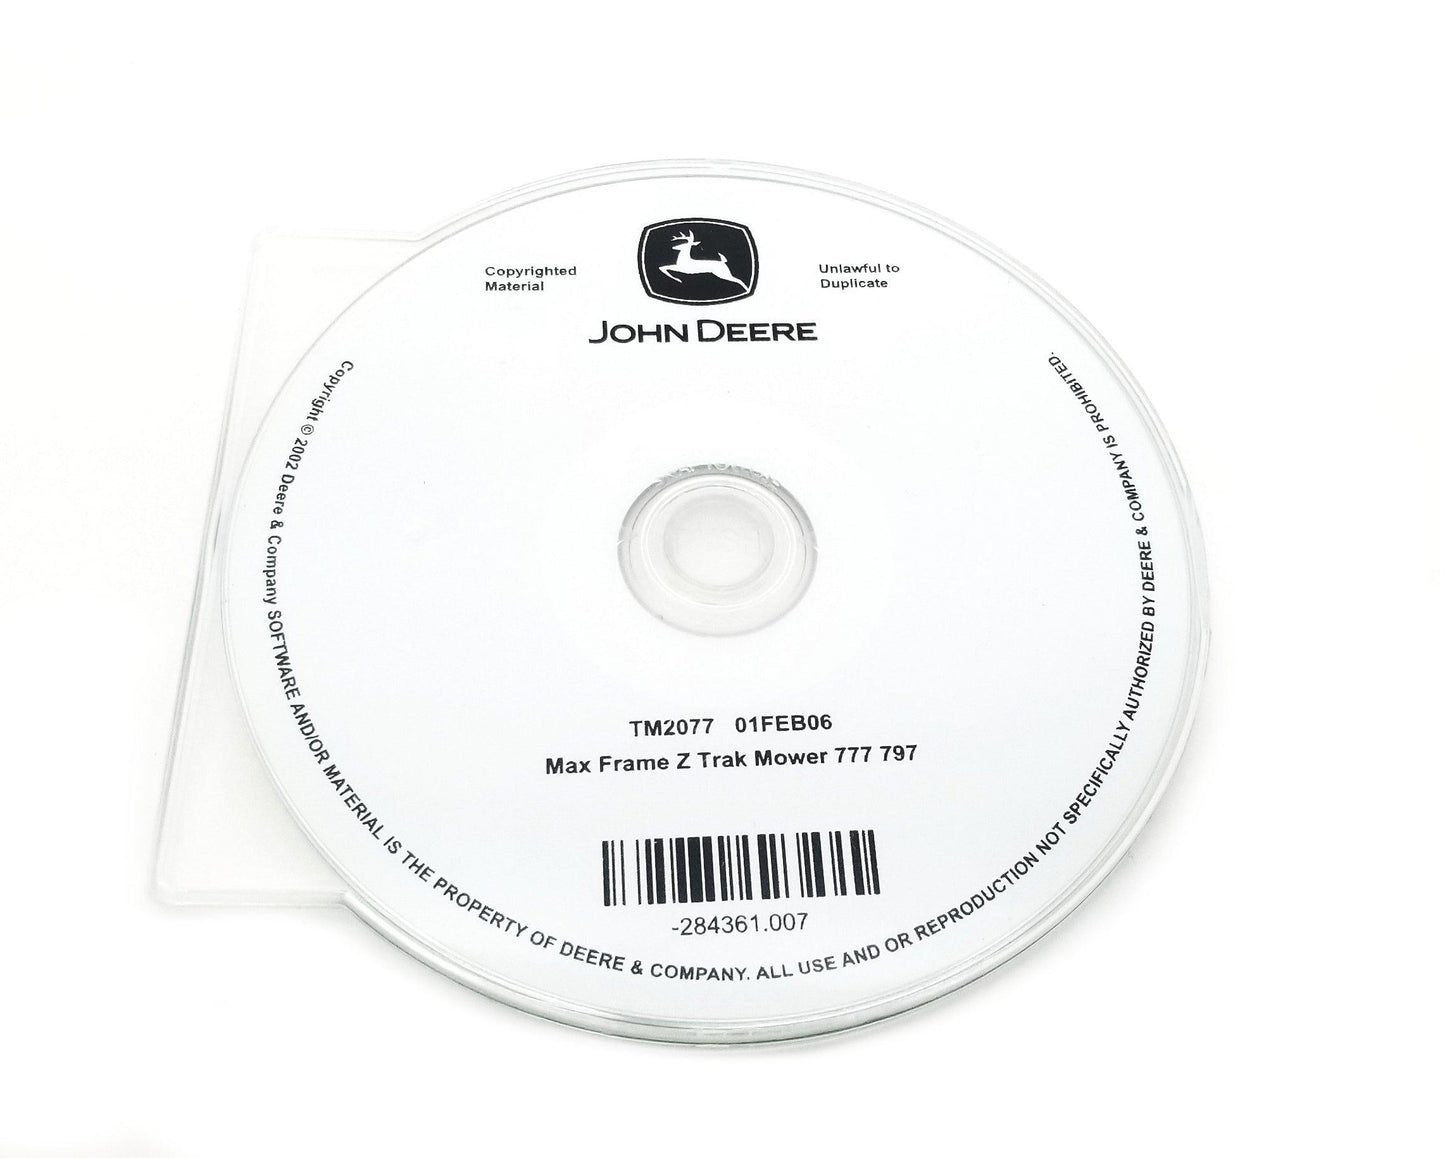 John Deere 777 and 797 MAX-Frame ZTRAK Technical Manual CD - TM2077CD